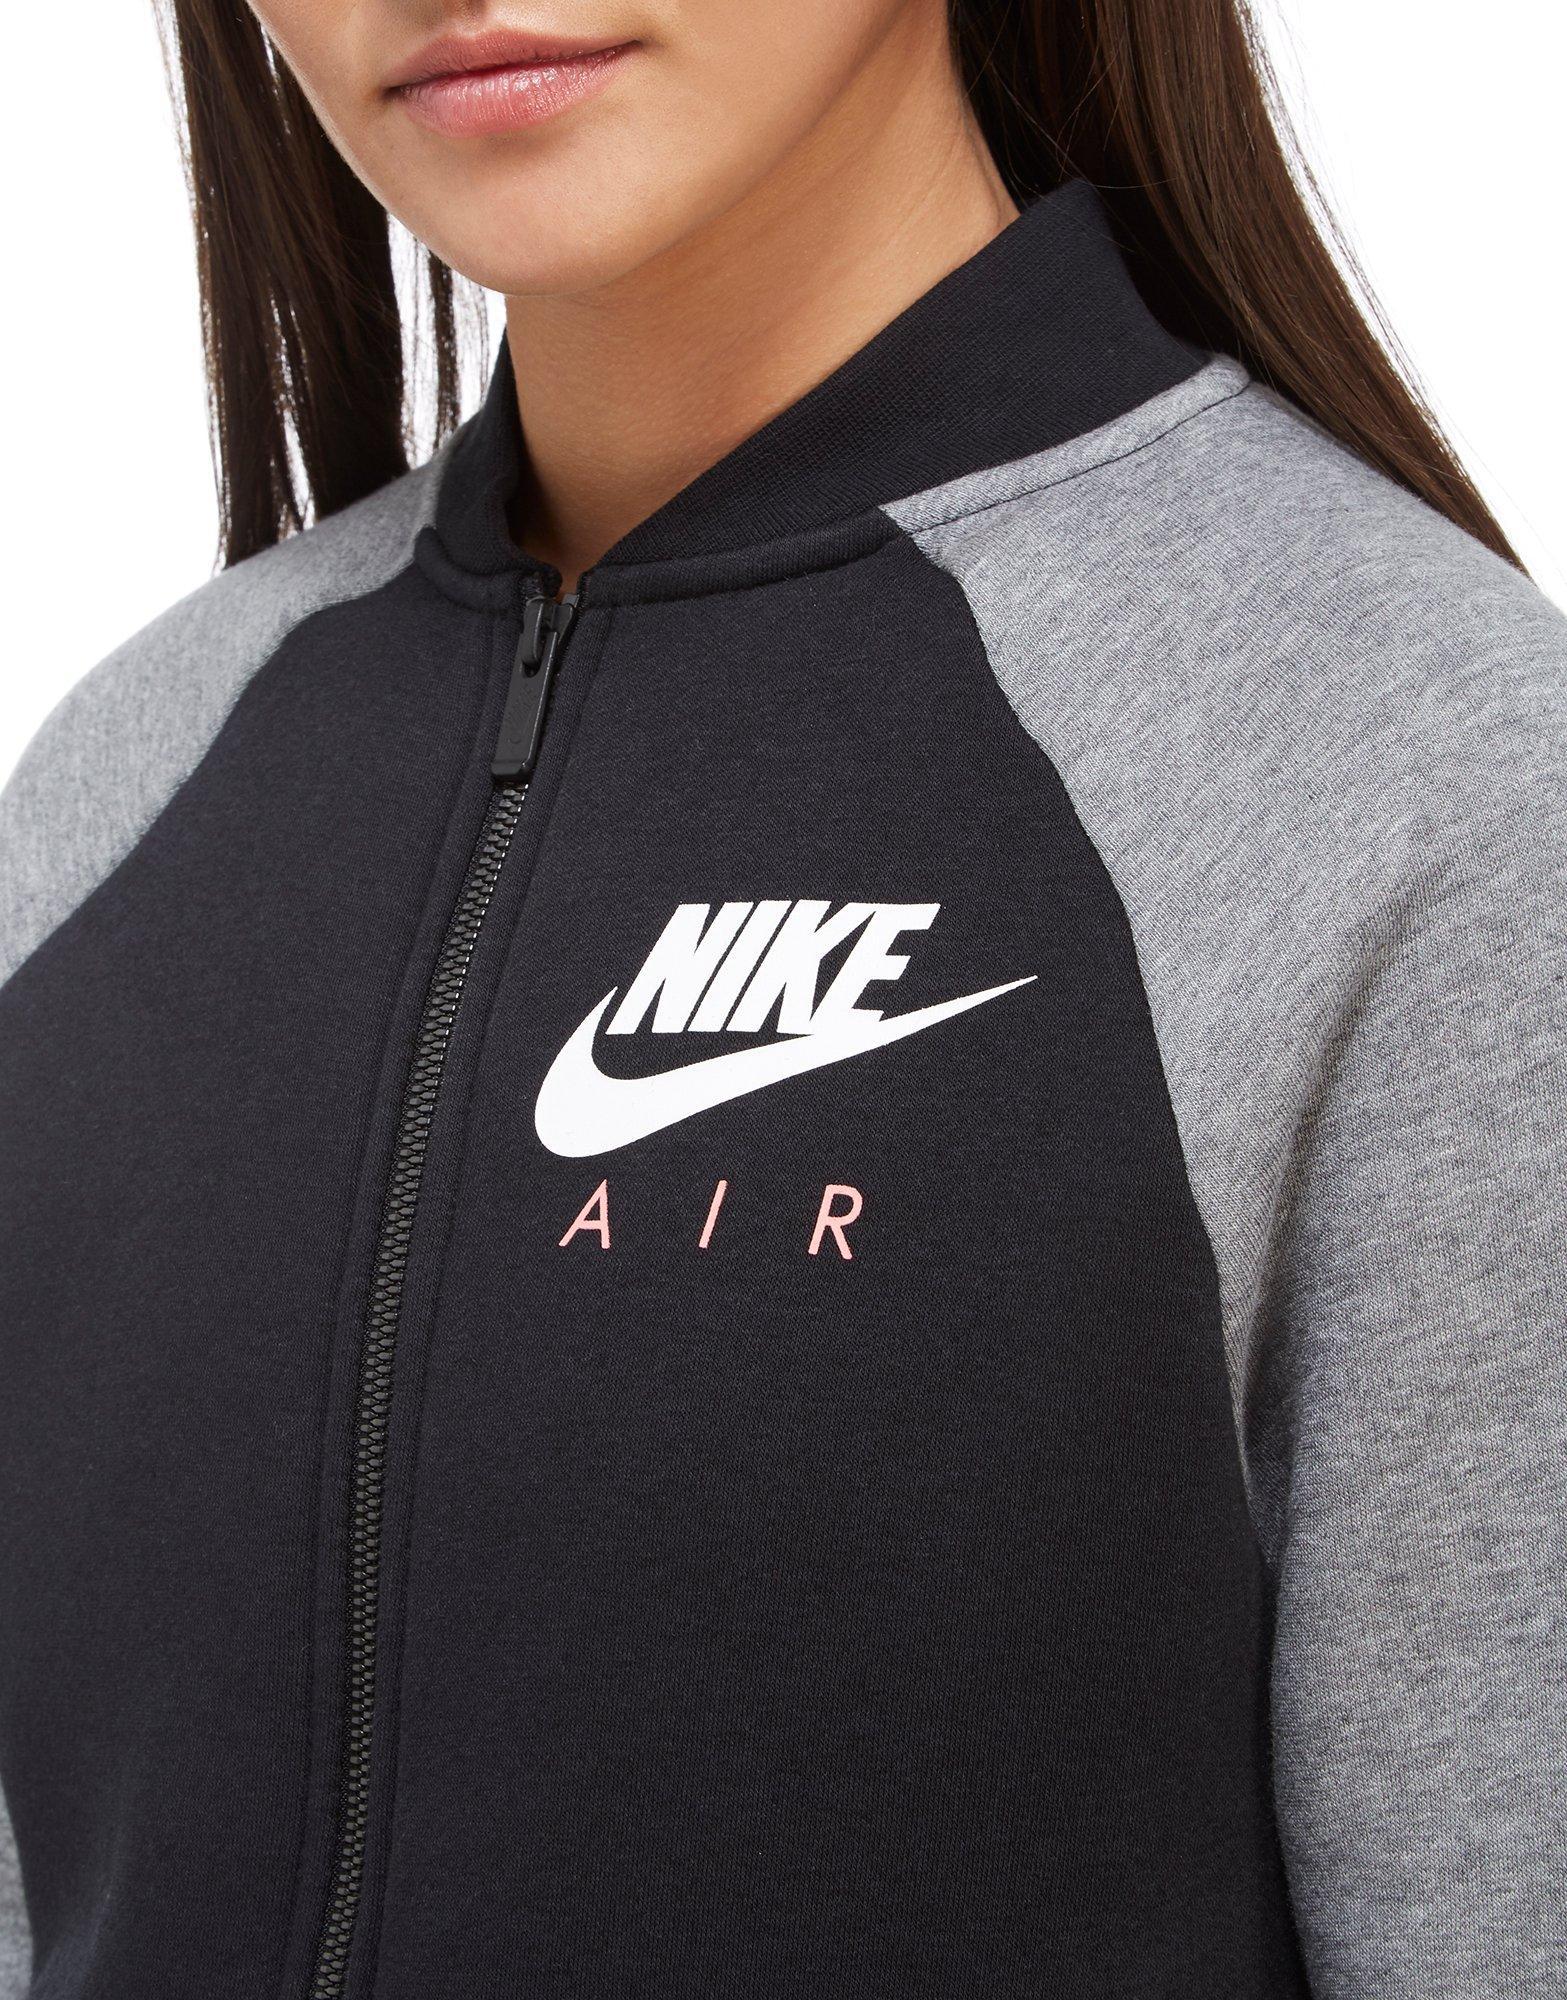 Nike Cotton Air Bomber Jacket in Black/Grey/Pink (Black) - Lyst